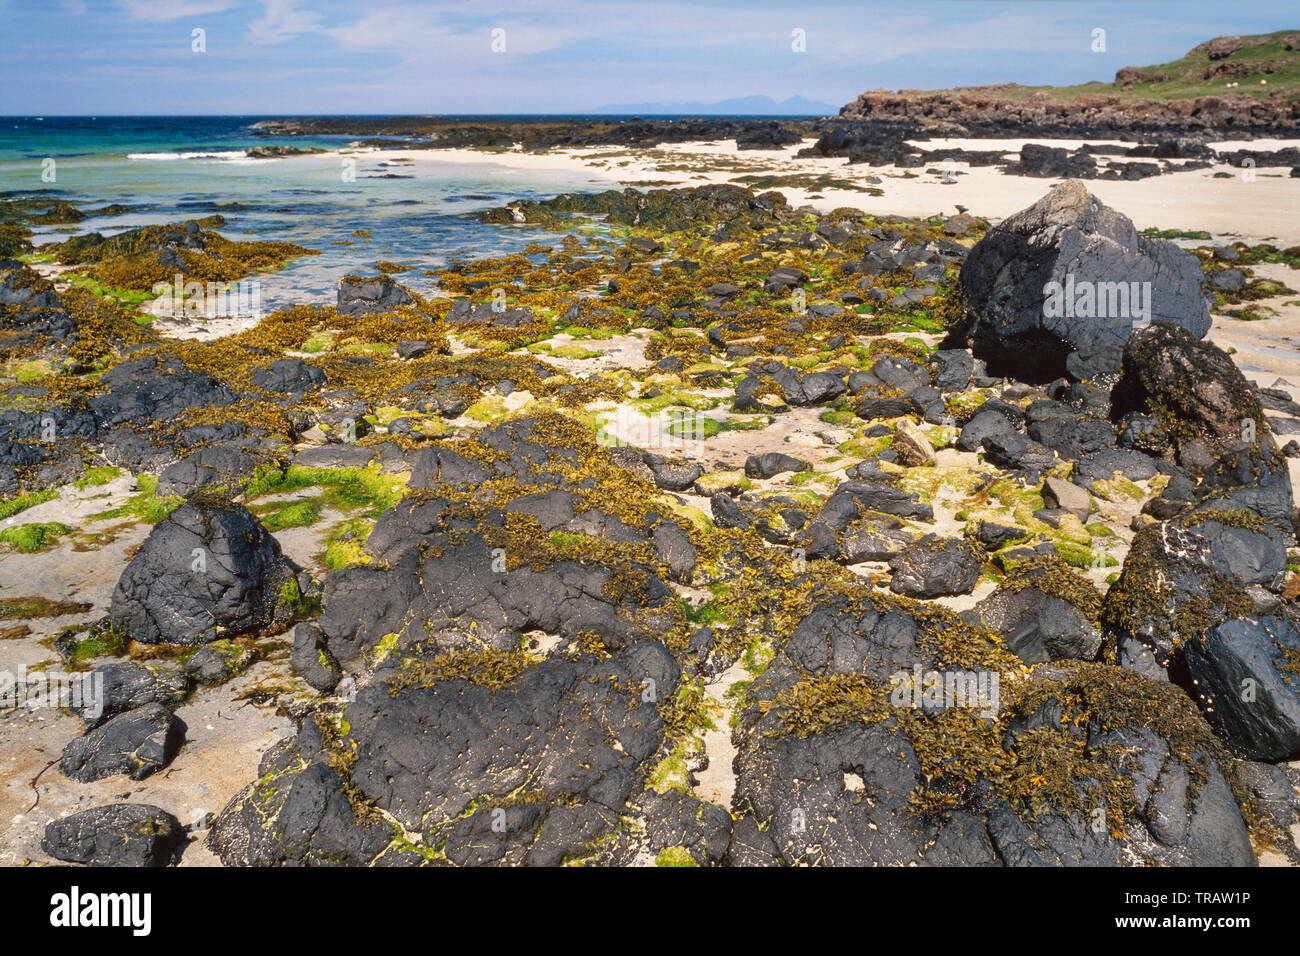 Ardnamurchan area, Western Highlands, Scotland, beach scene with mixed seaweeds on rocks, clean sandy beach Stock Photo